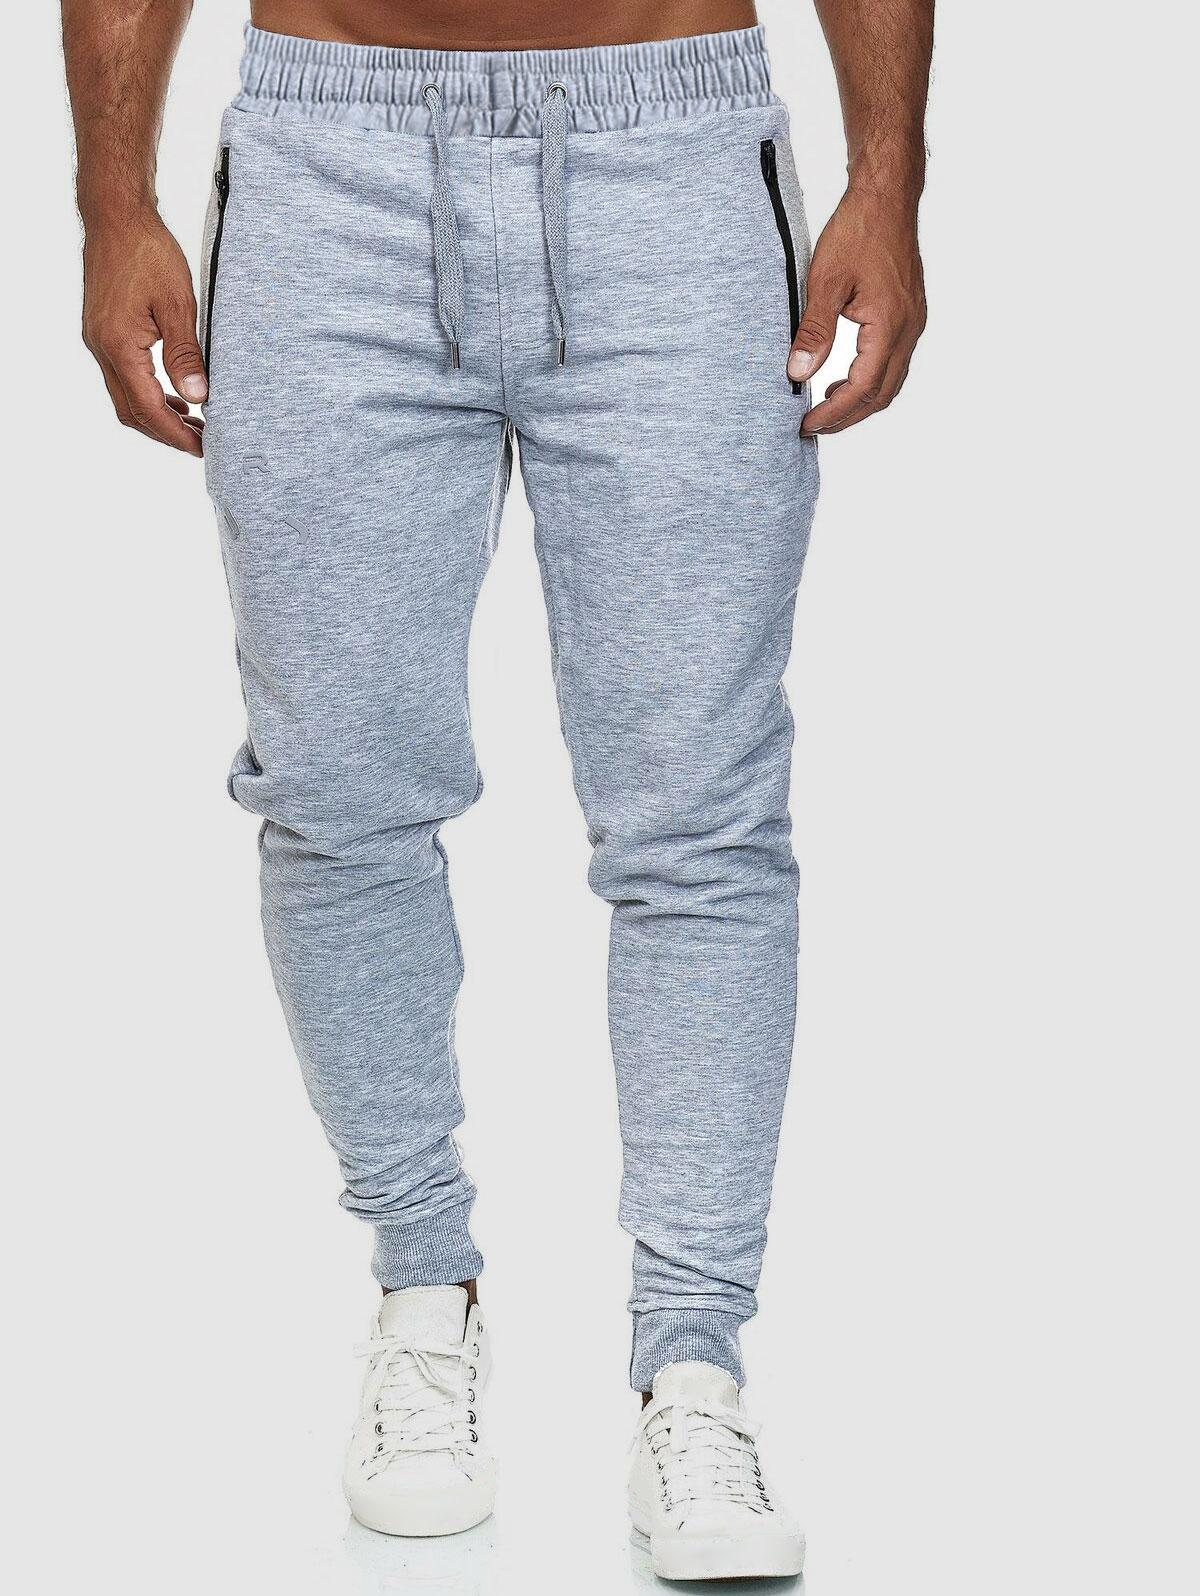 ZAFUL Men's Zip Pocket Design Drawstring Jogger Pants M Light gray